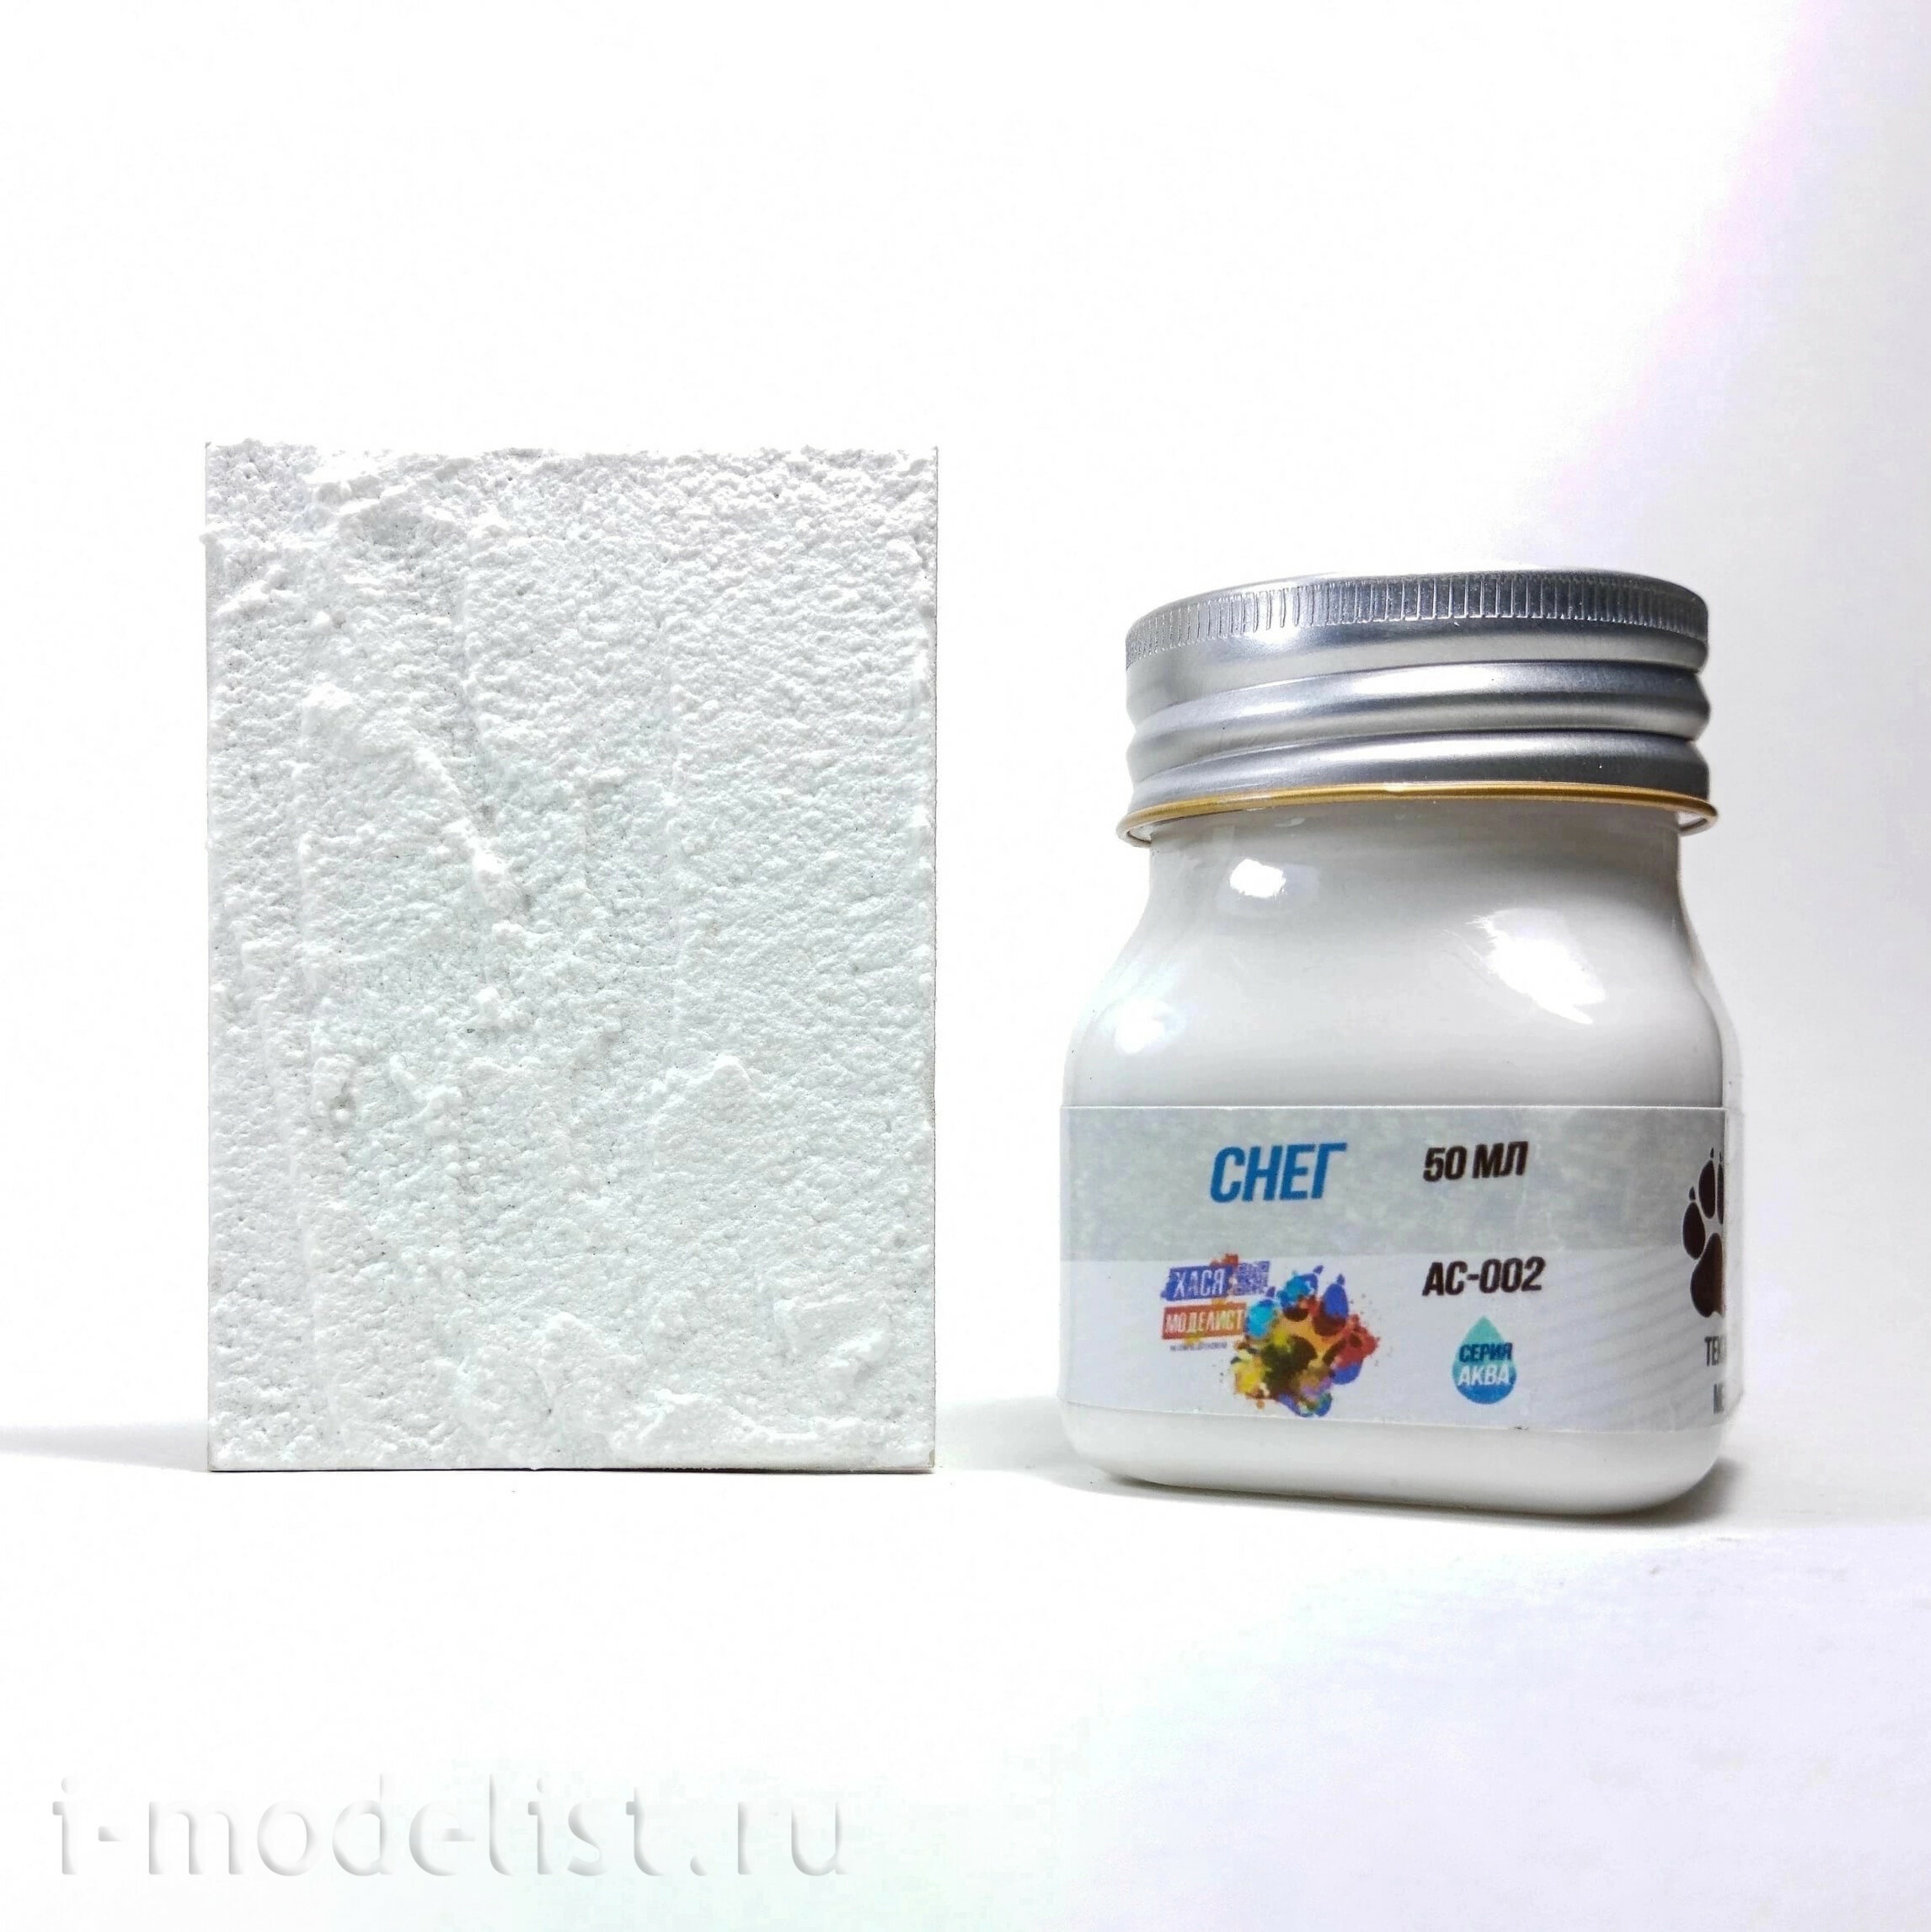 AS002 Hasya Modeler Acrylic mixture, snow, fine-grained, 50 ml